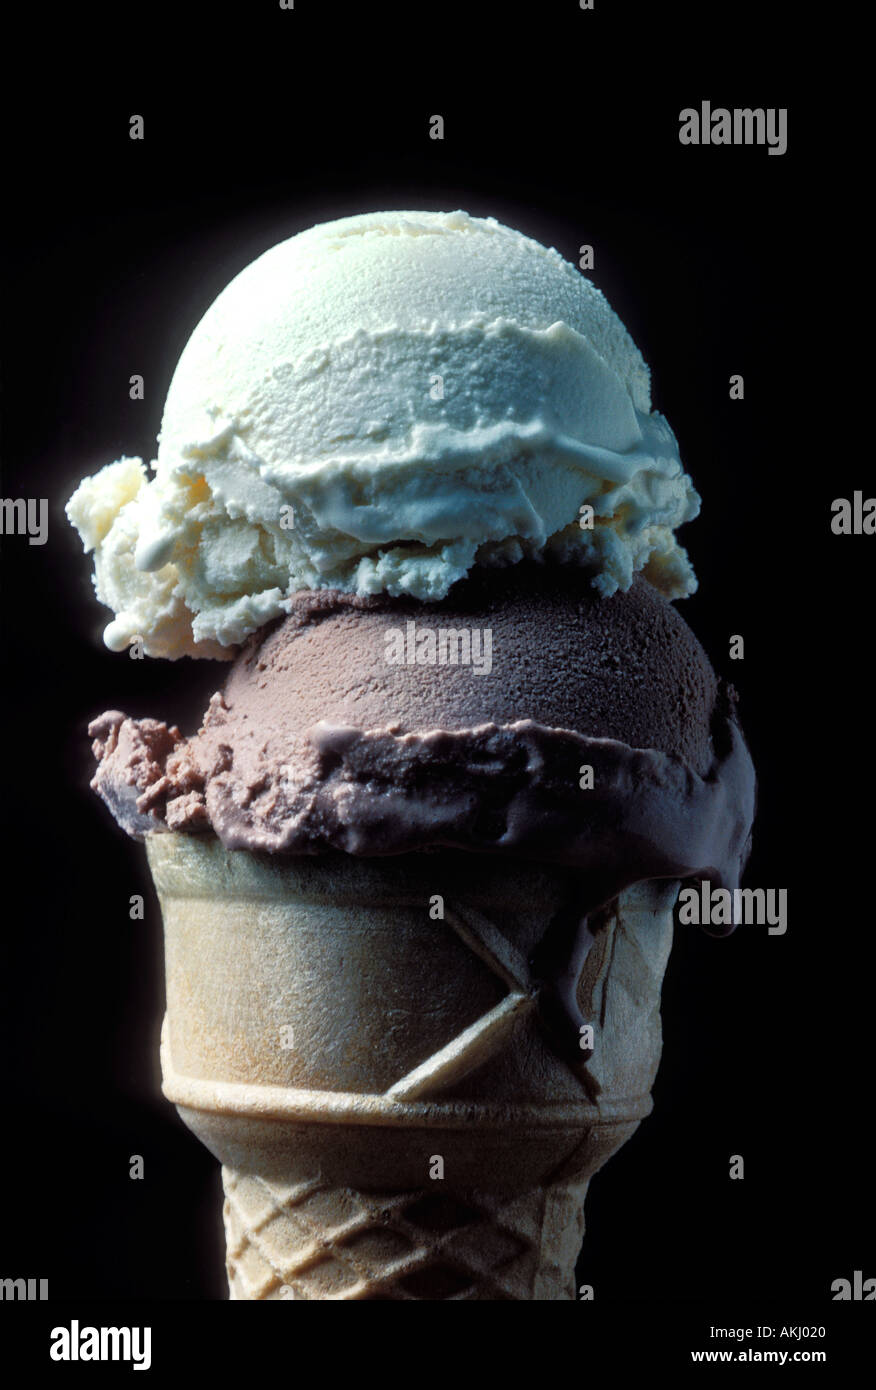 110+ Double Scoop Ice Cream Cone Stock Photos, Pictures & Royalty